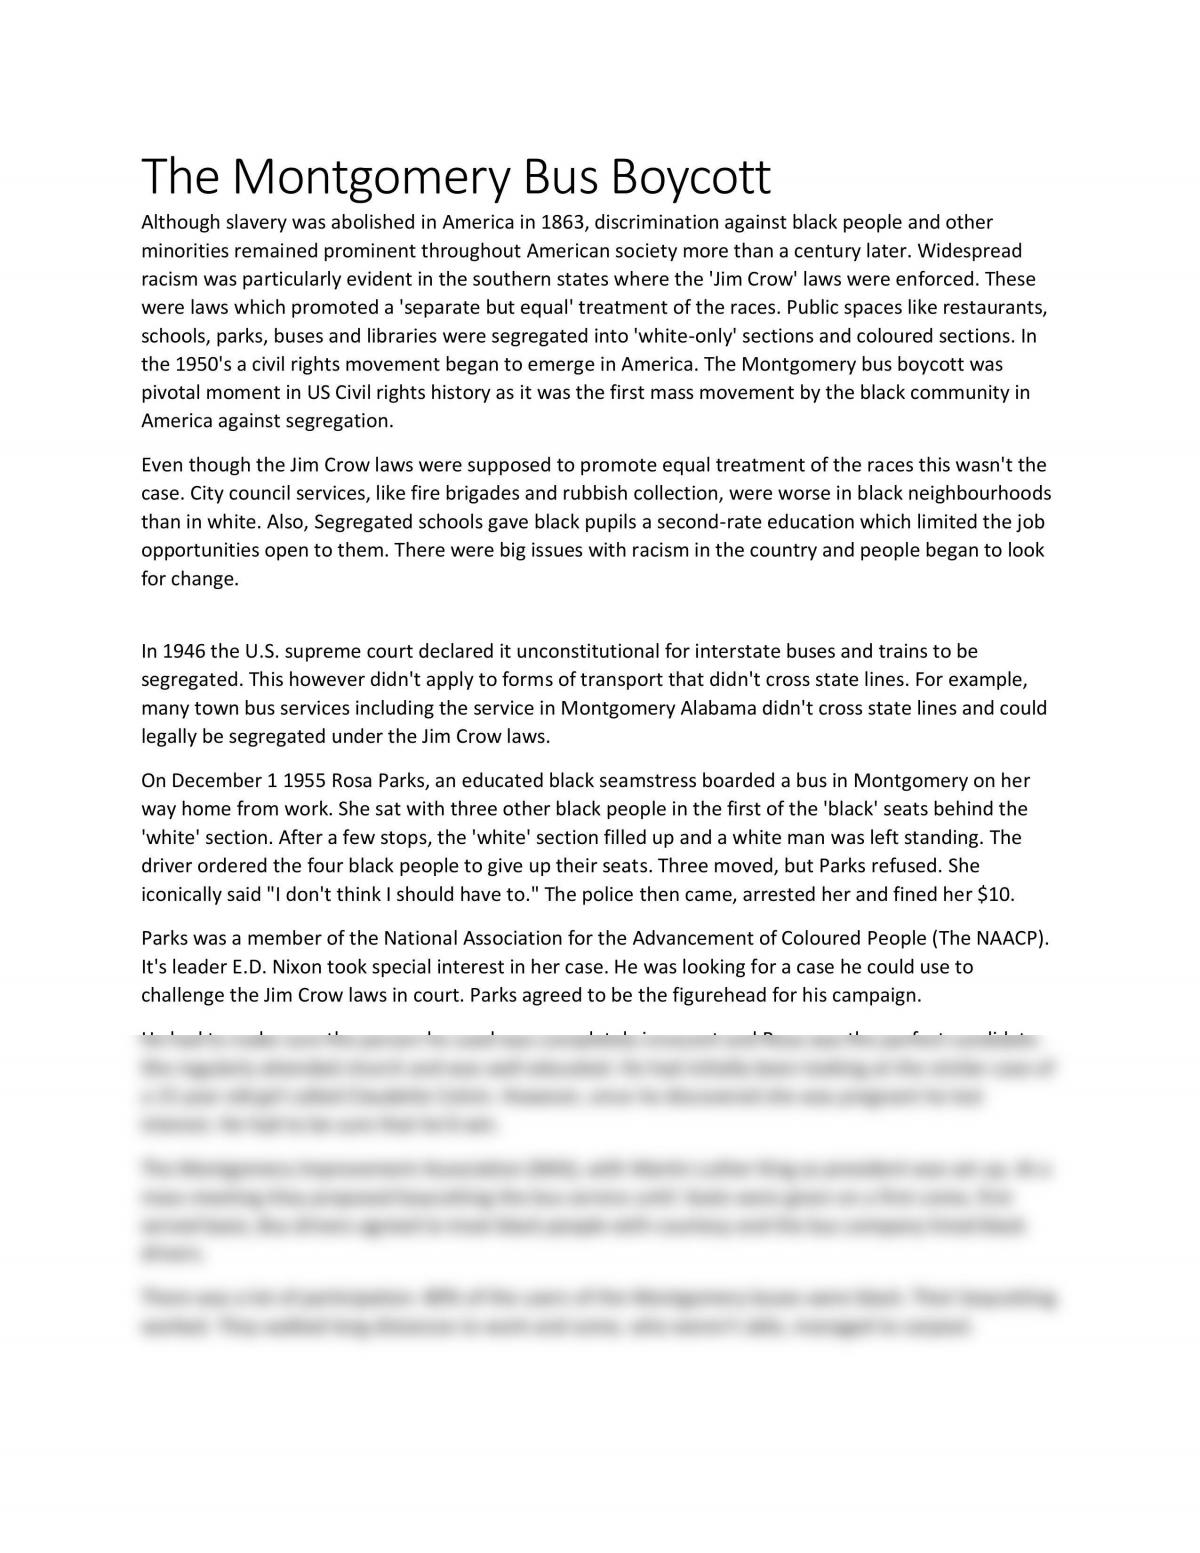 montgomery bus boycott essay conclusion